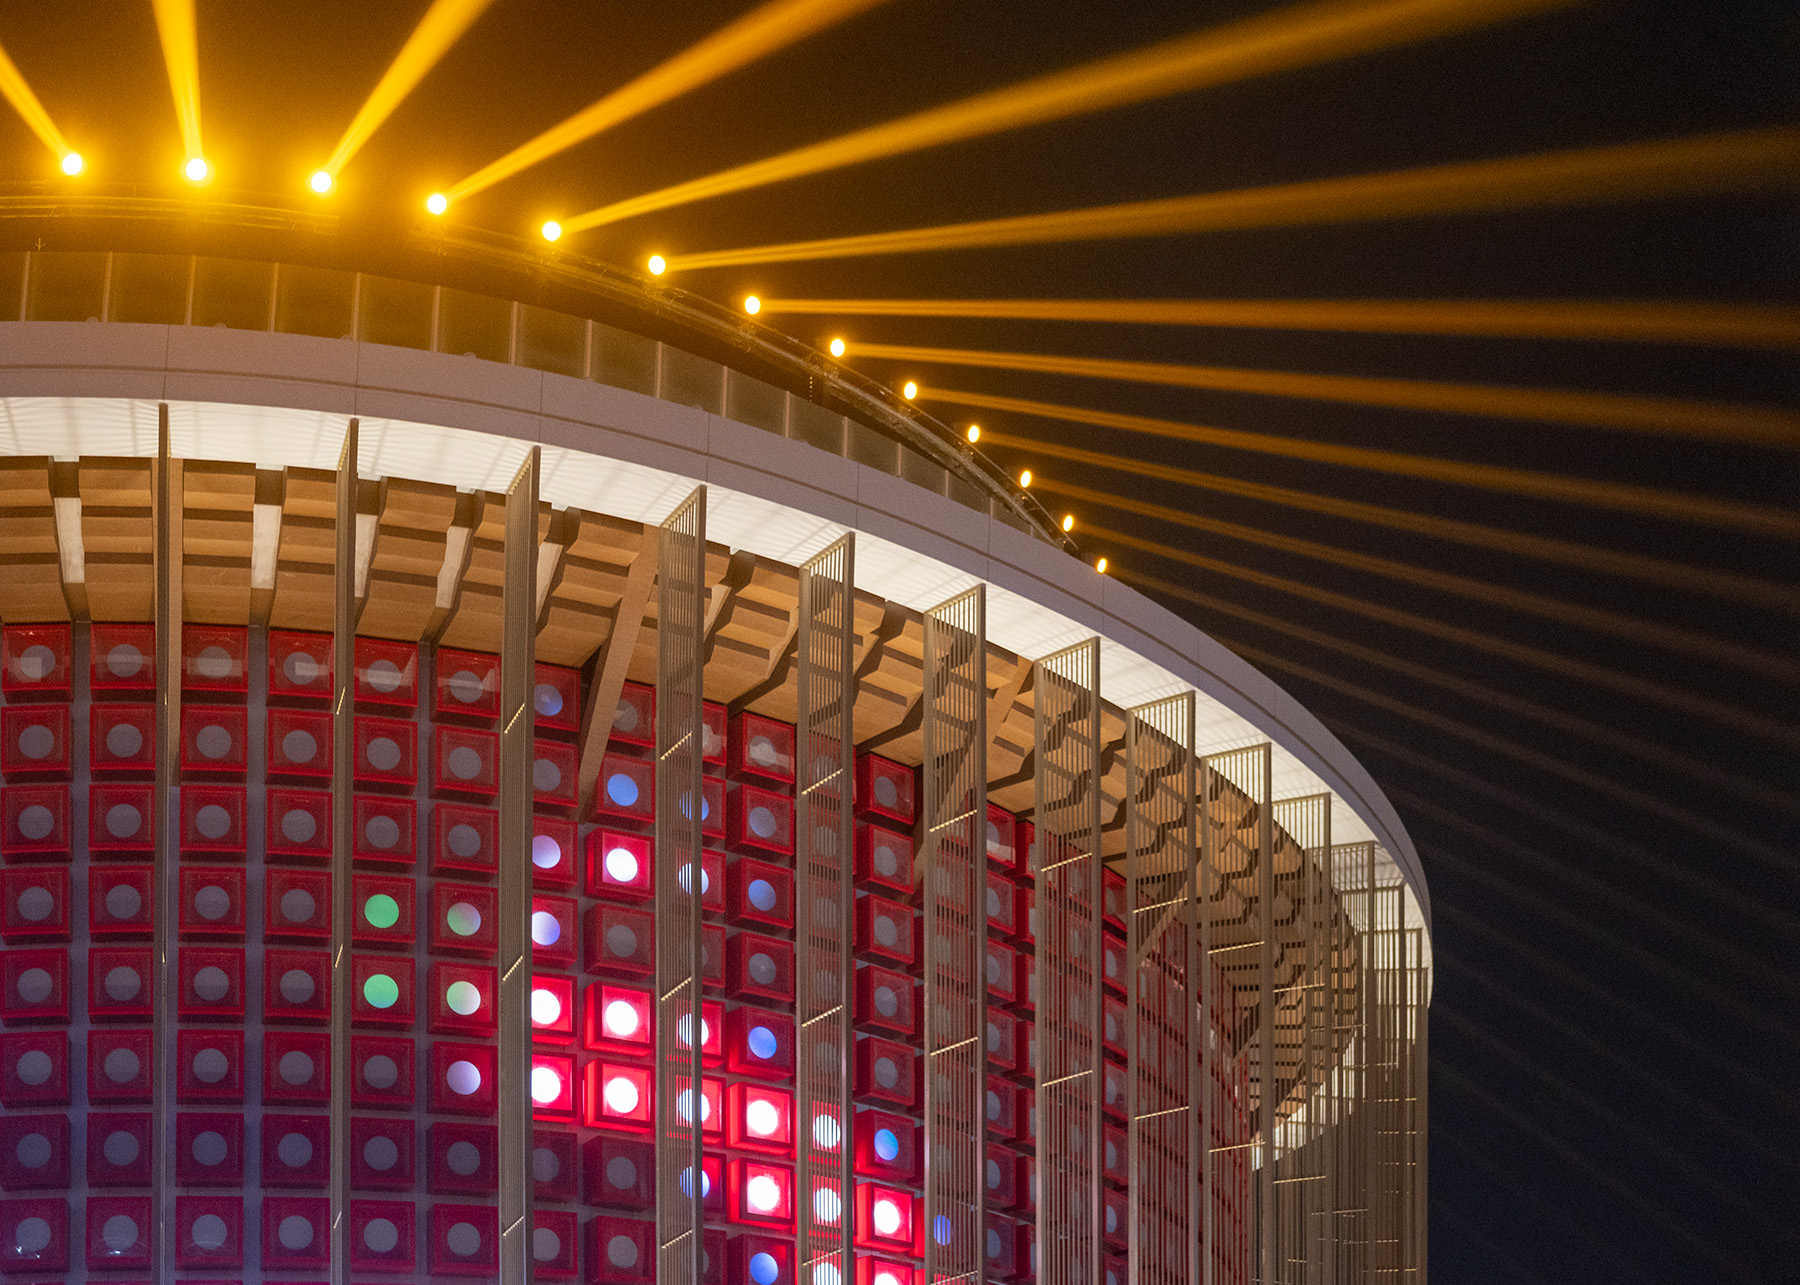 A photo of China's World Expo pavilion at night